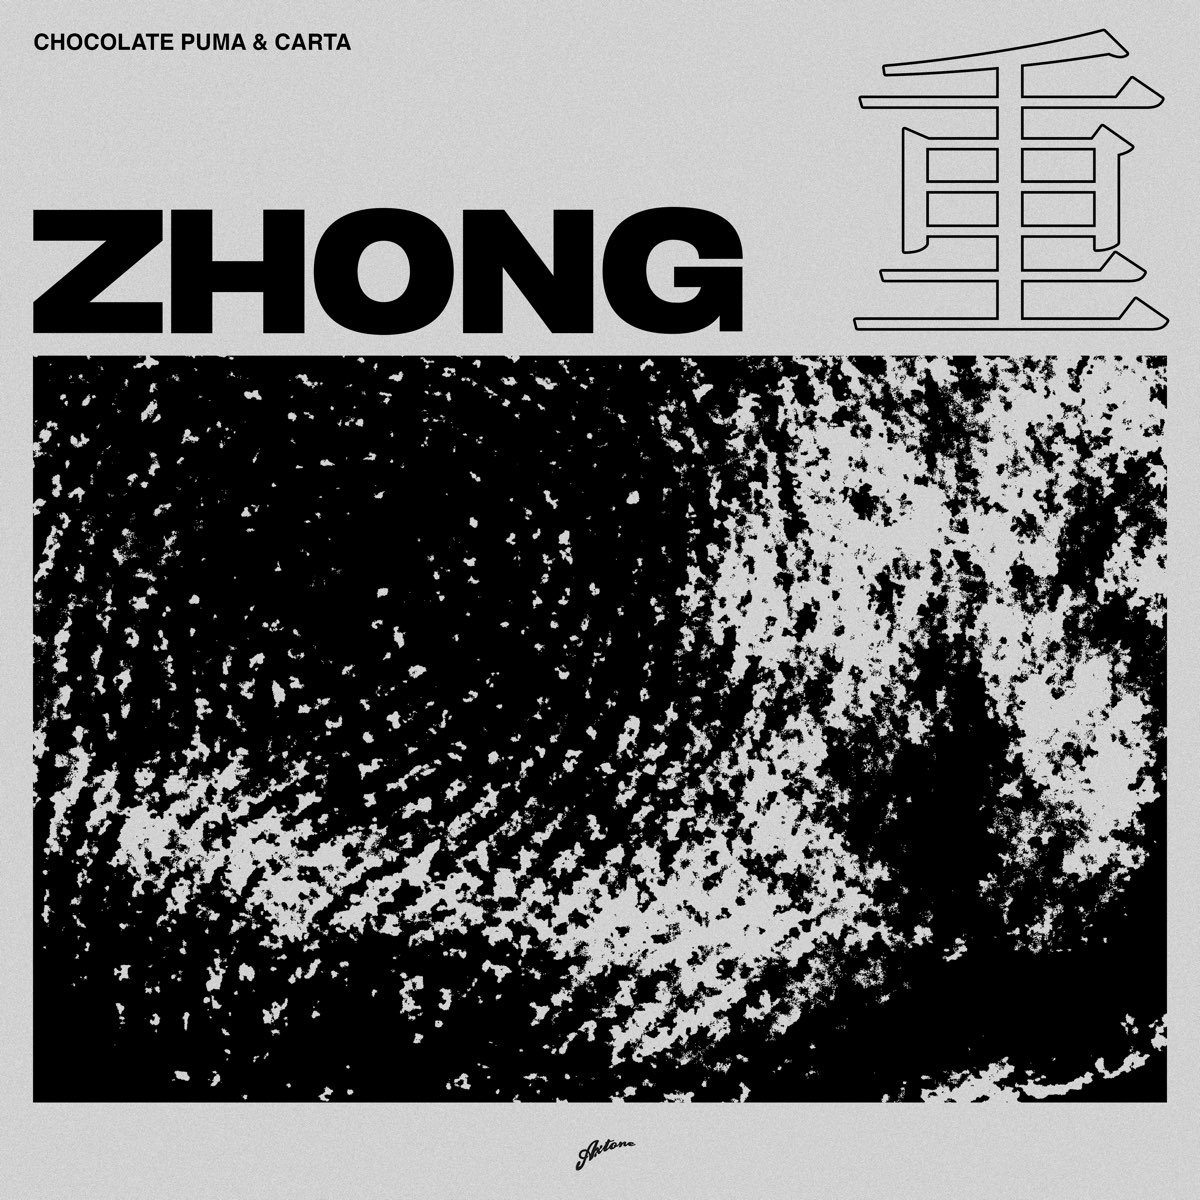 Zhong - Single - Album by Chocolate Puma & Carta - Apple Music